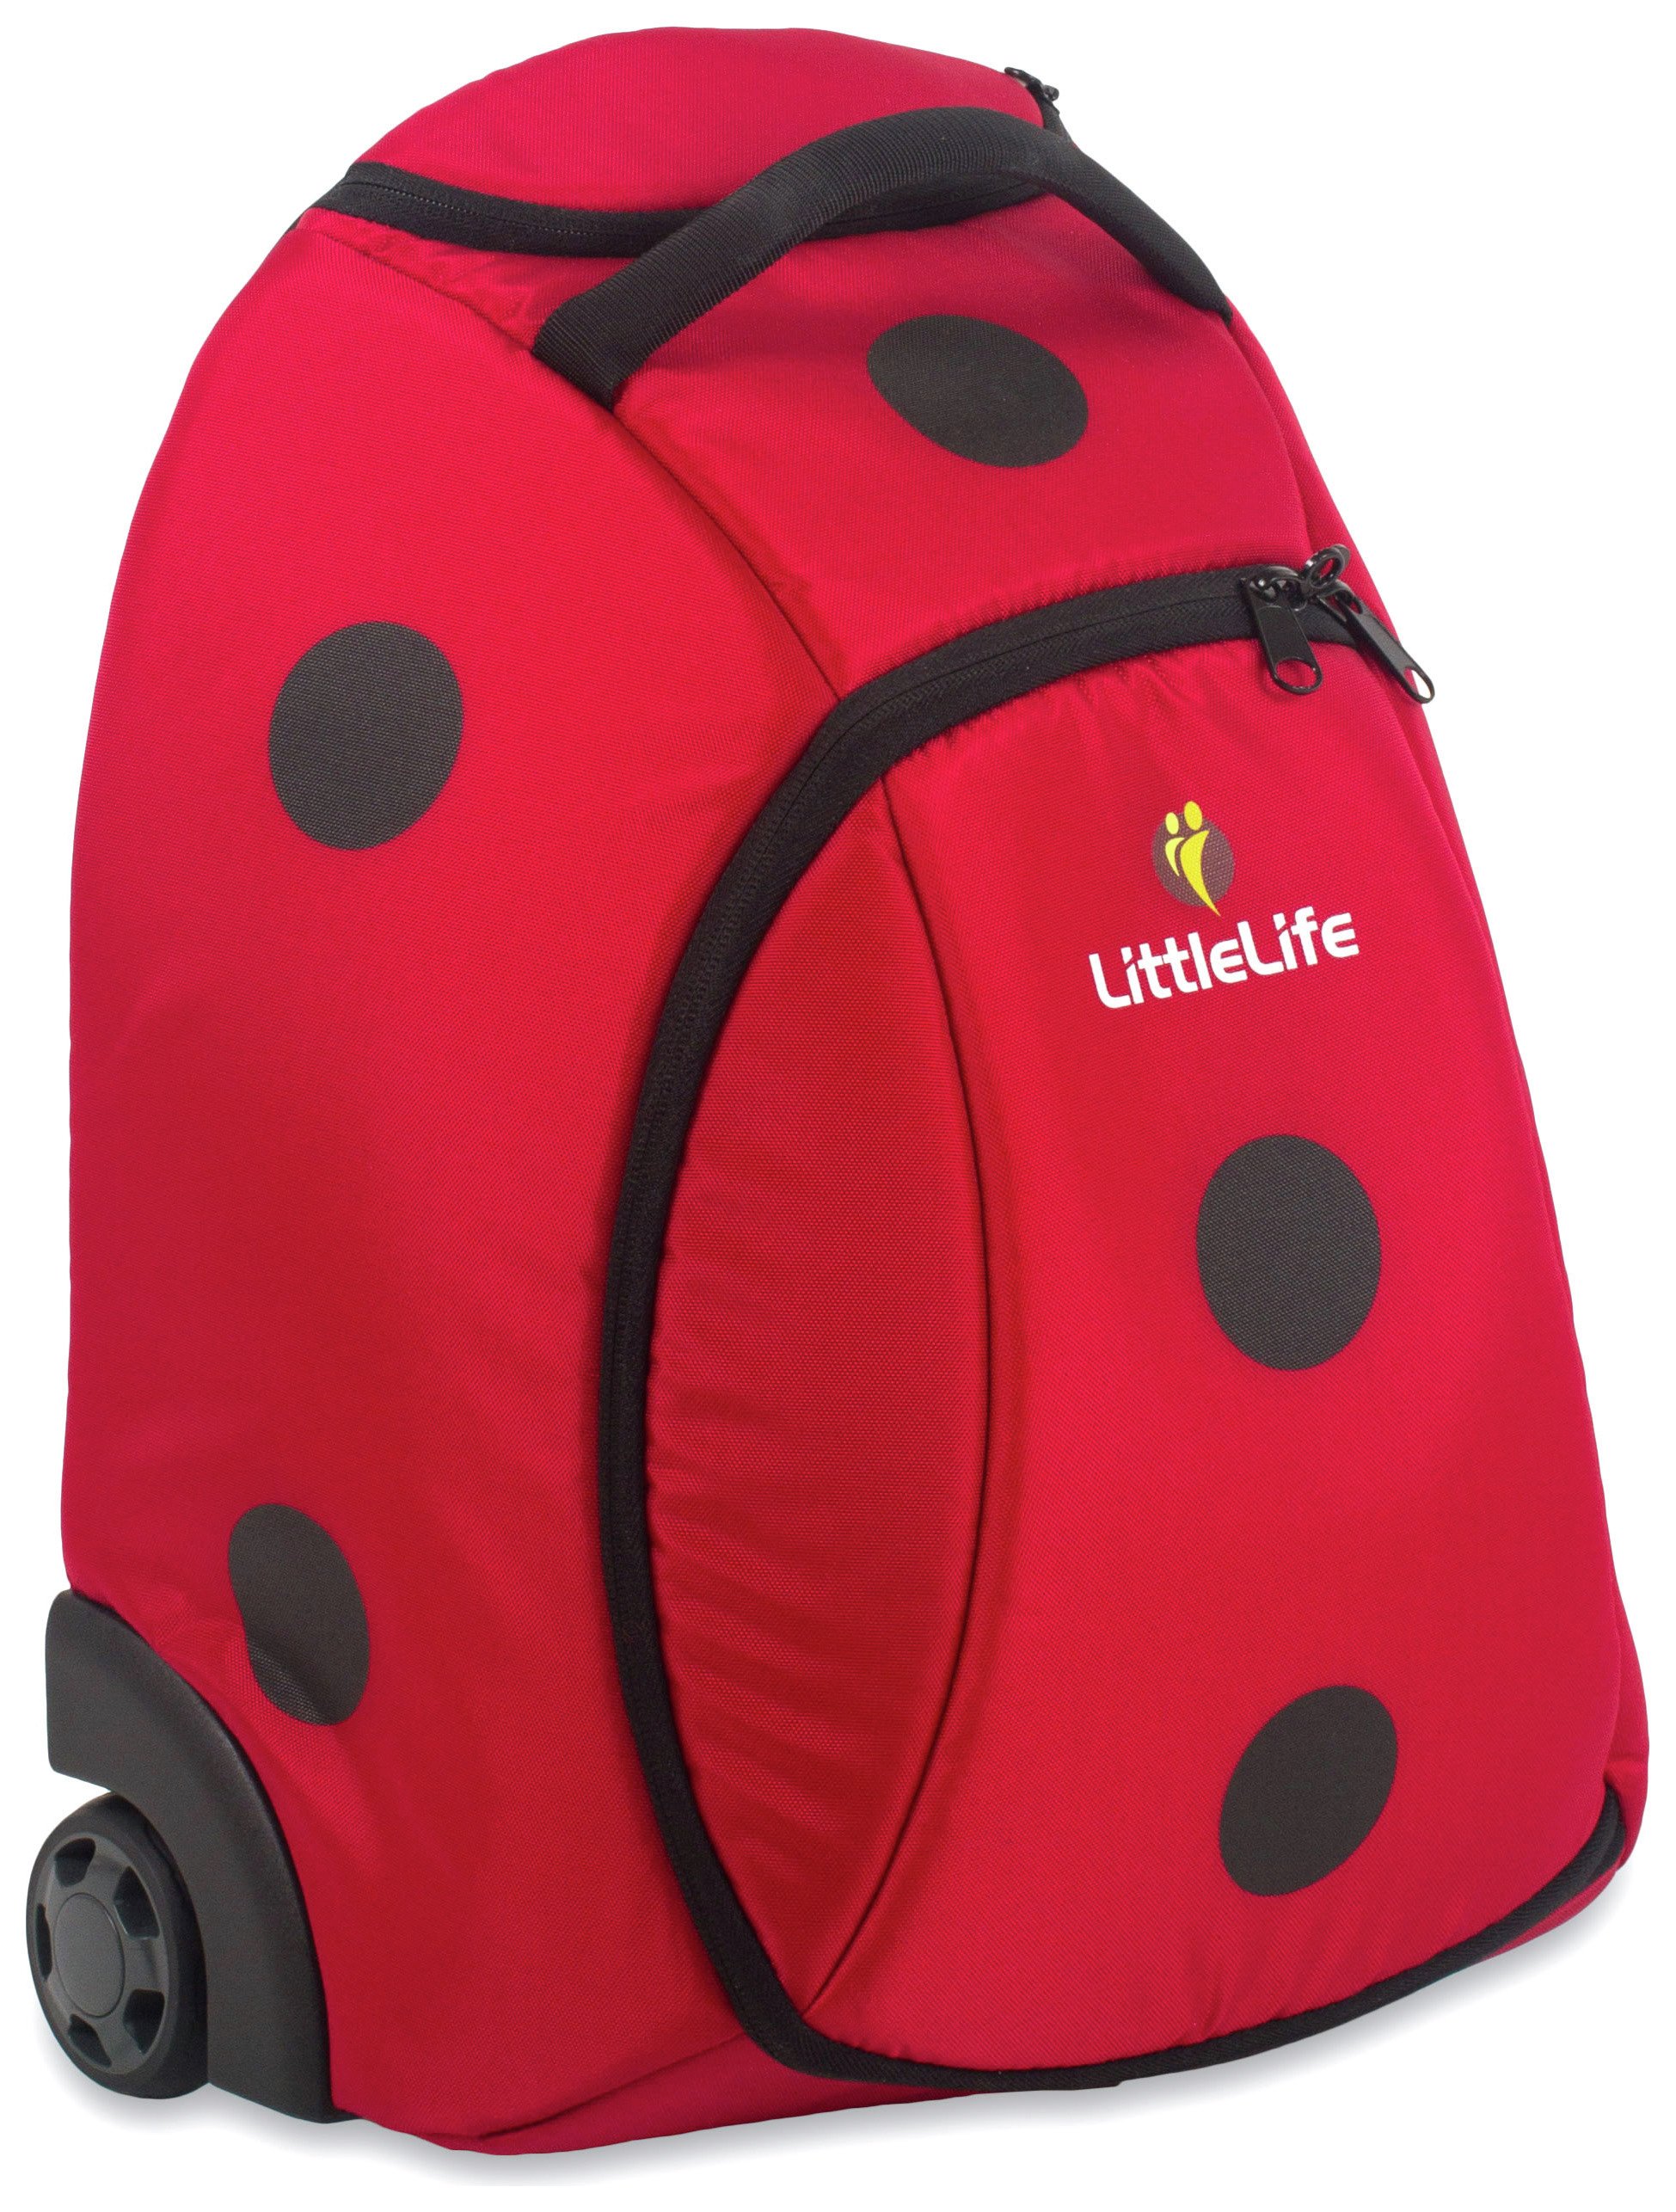 LittleLife Animal Kids Suitcase